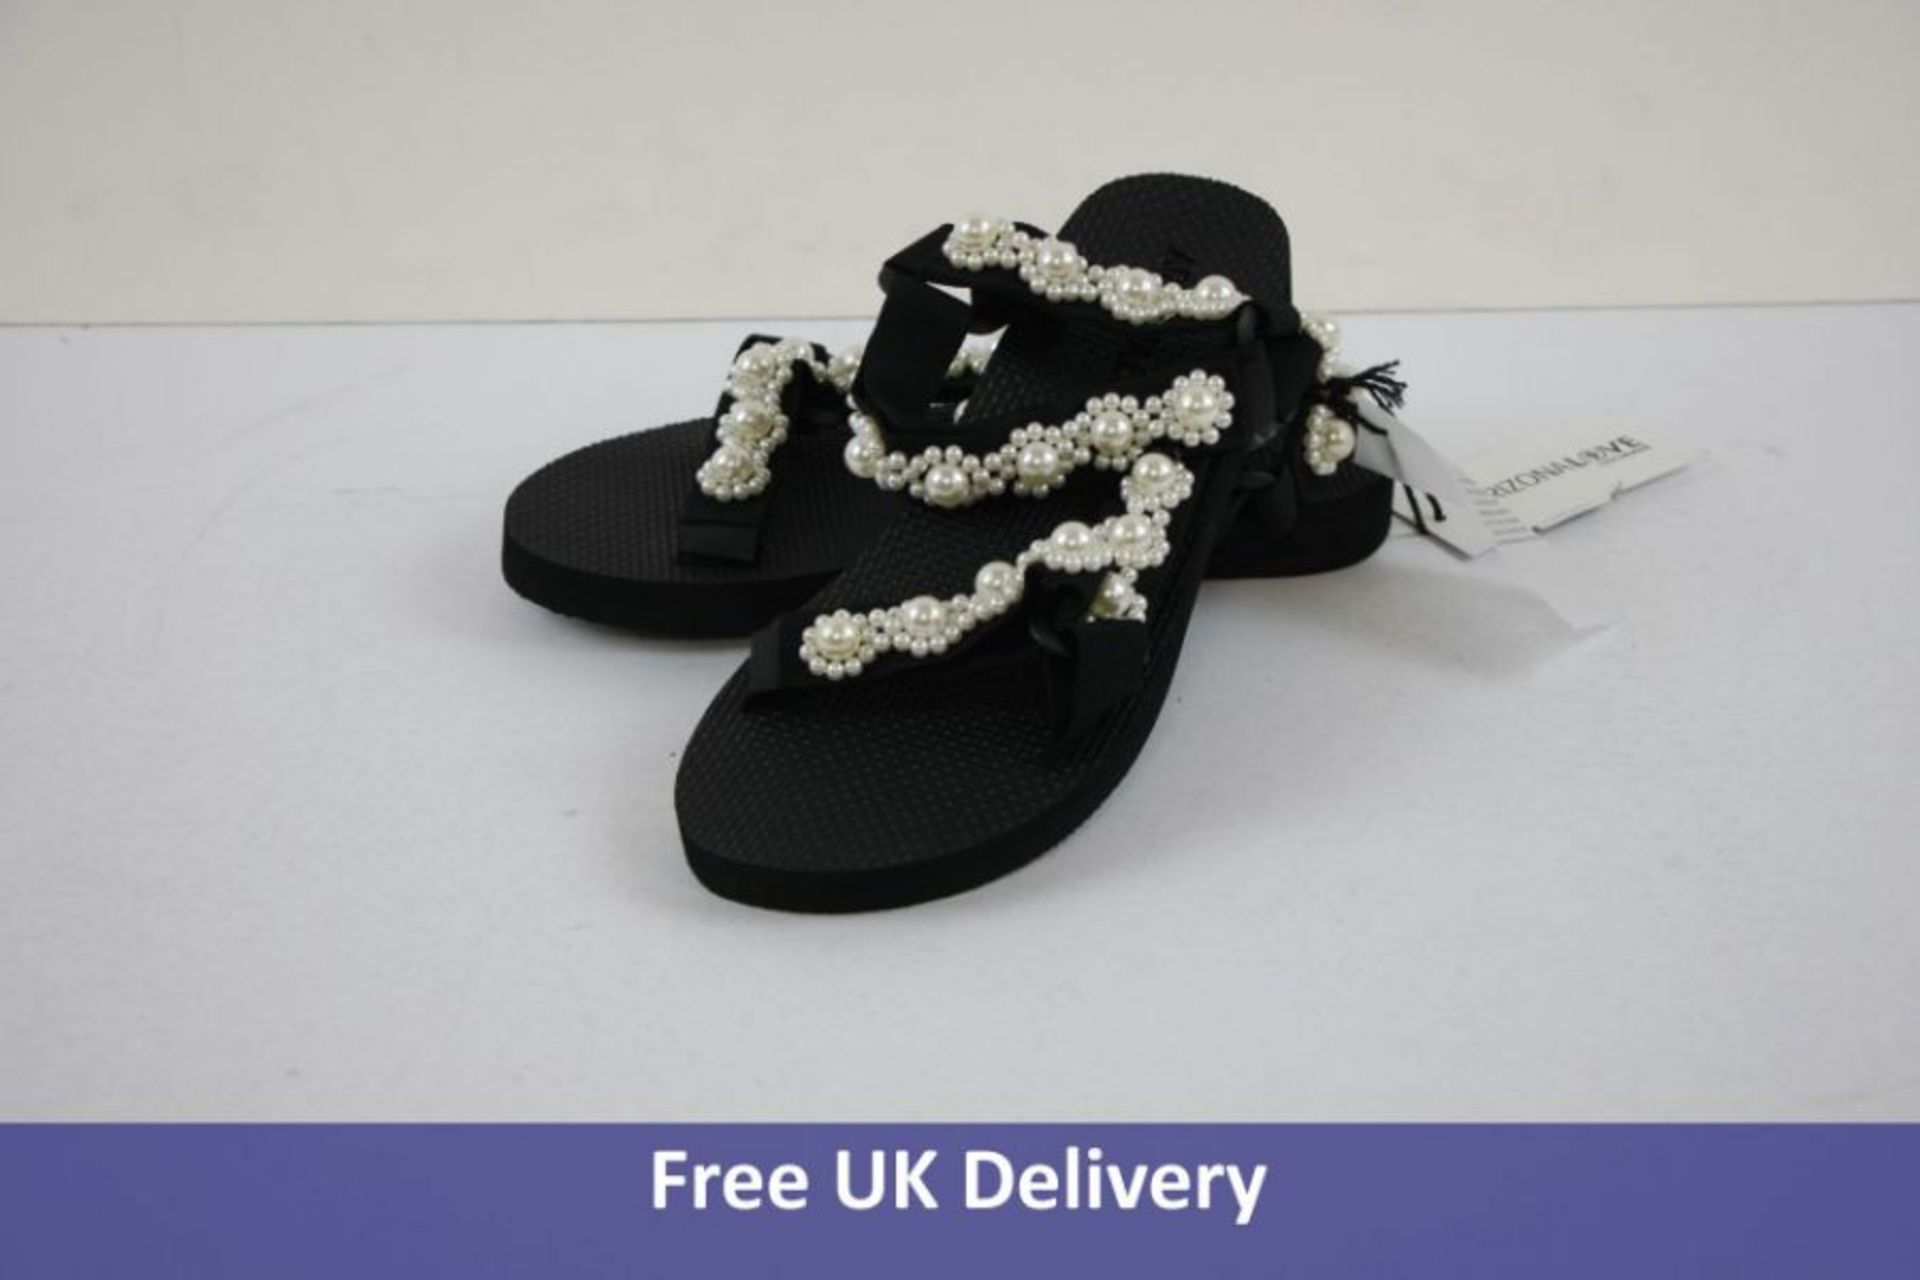 Arizona Love Women's Pearl Sandals, Black and White, UK 7